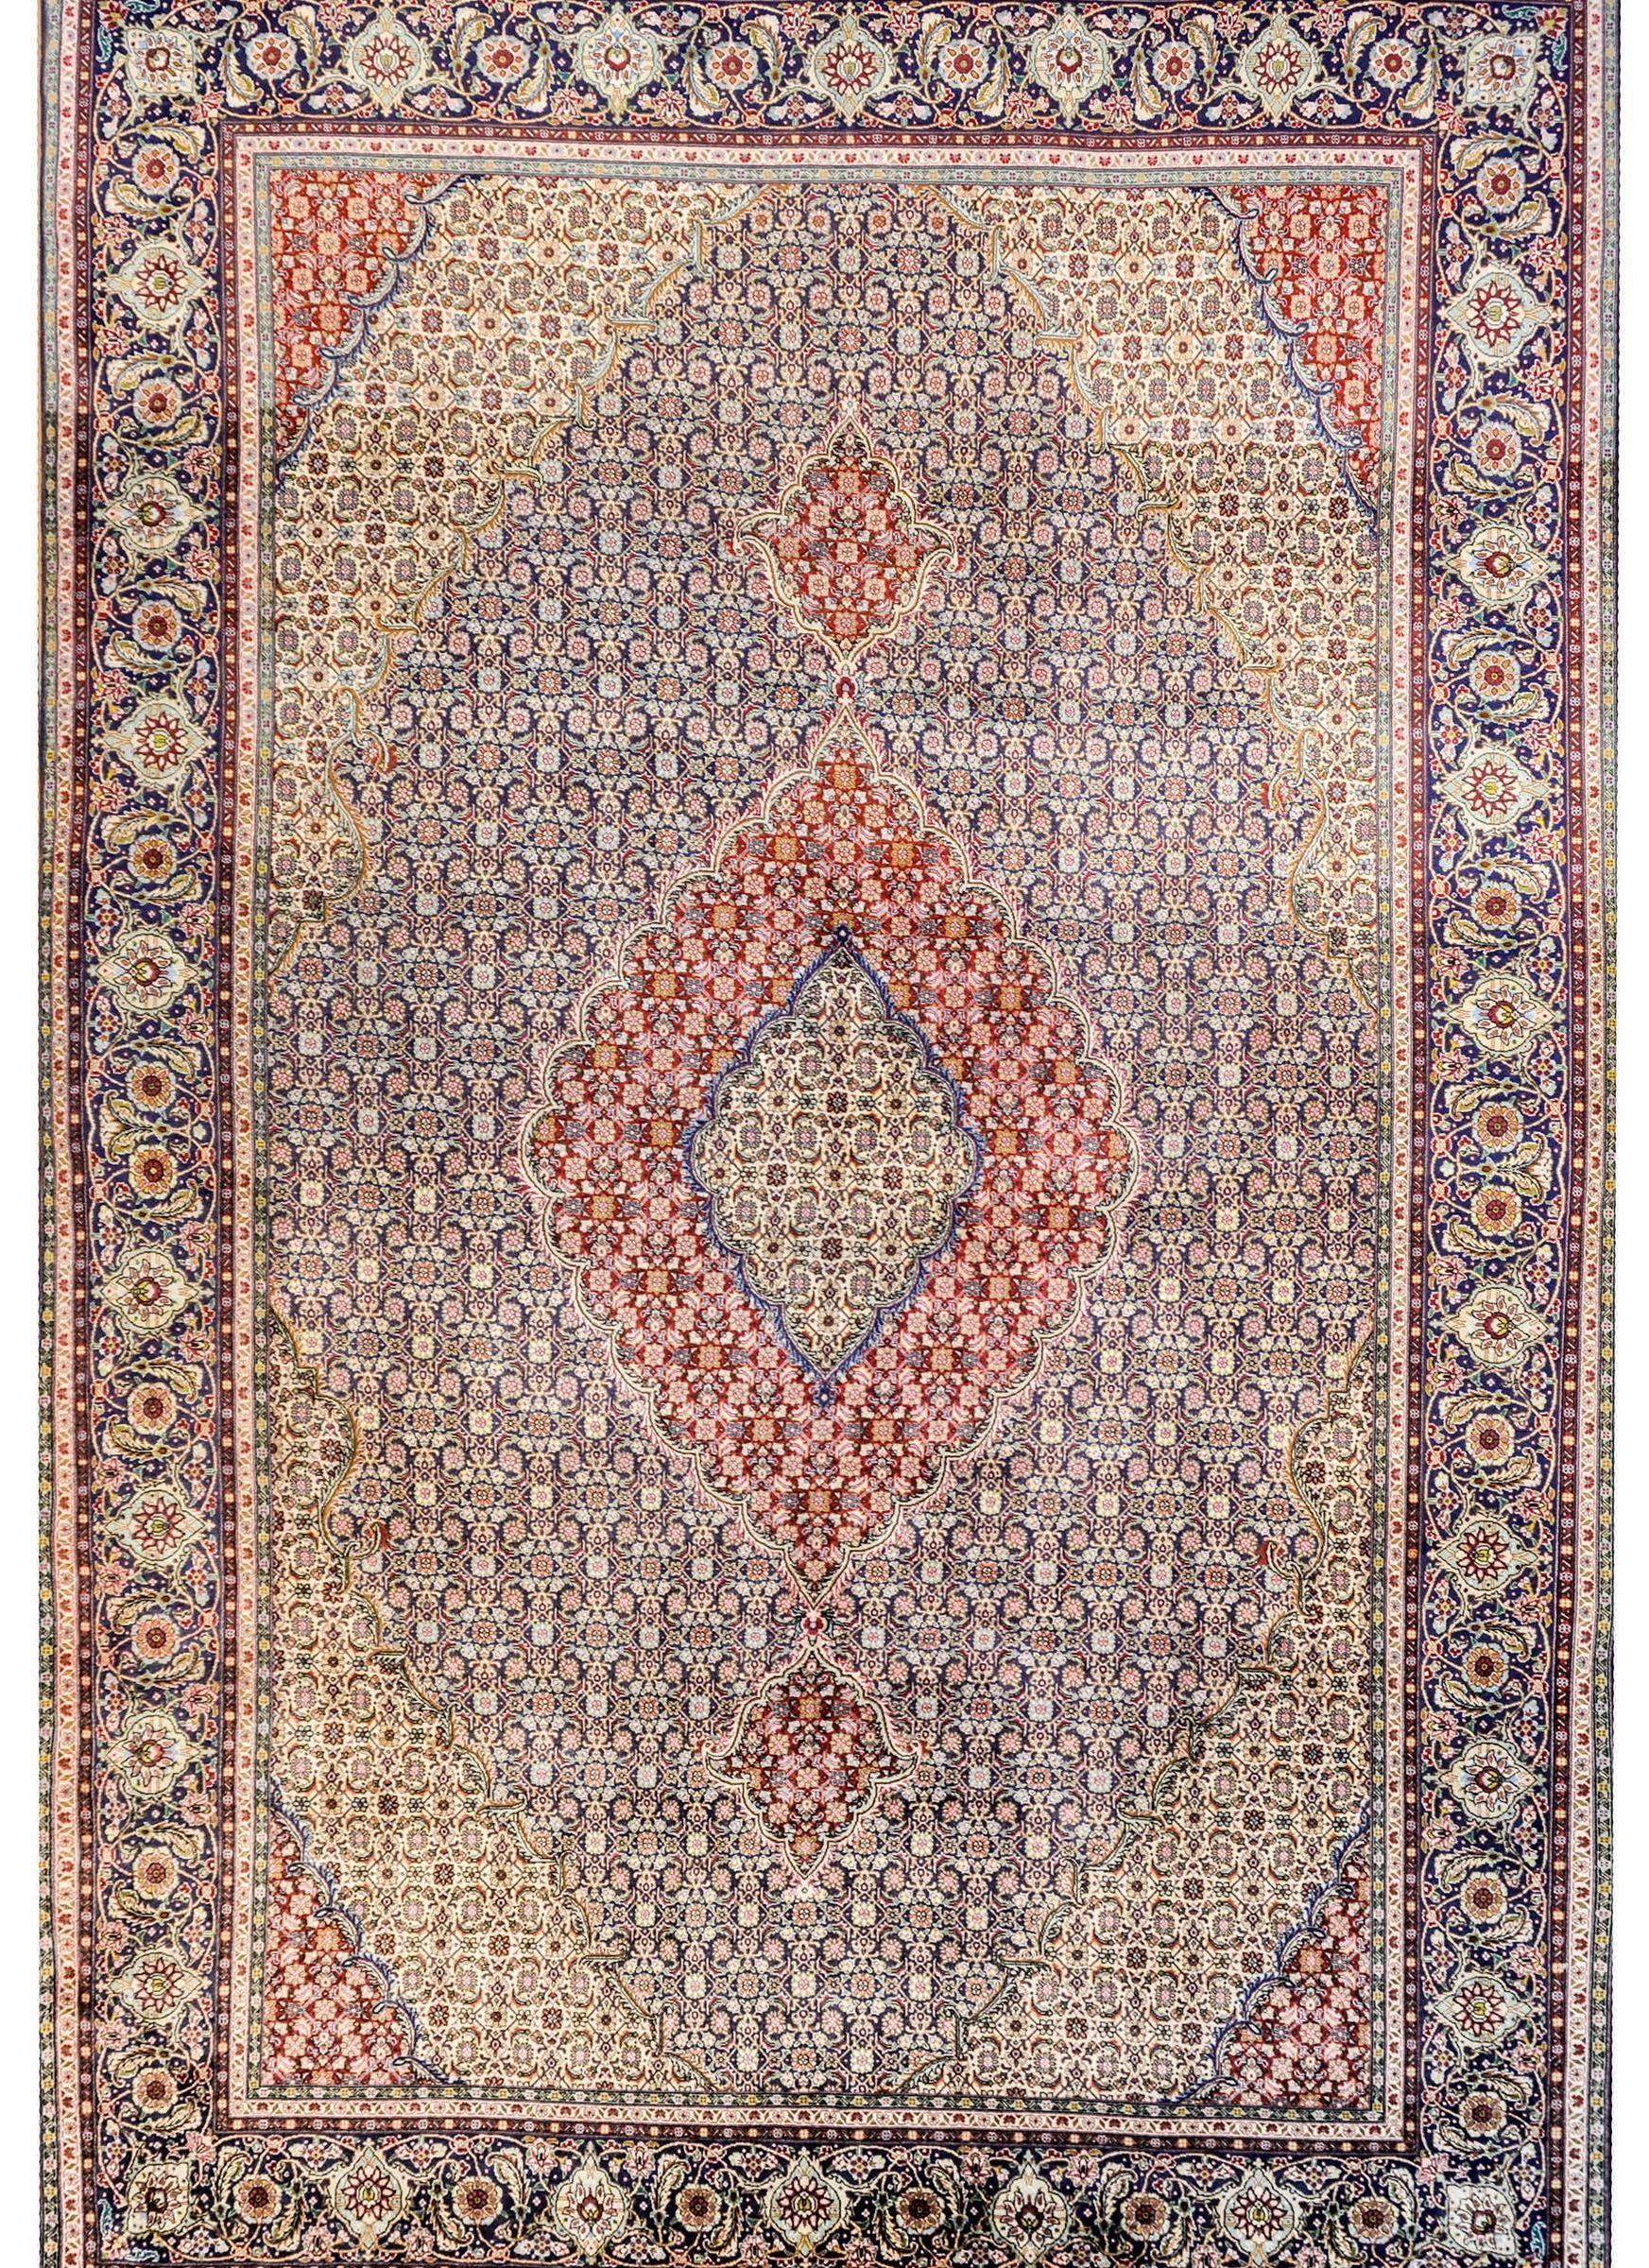 A gorgeous Persian Tabriz rug with a densely woven trellis 